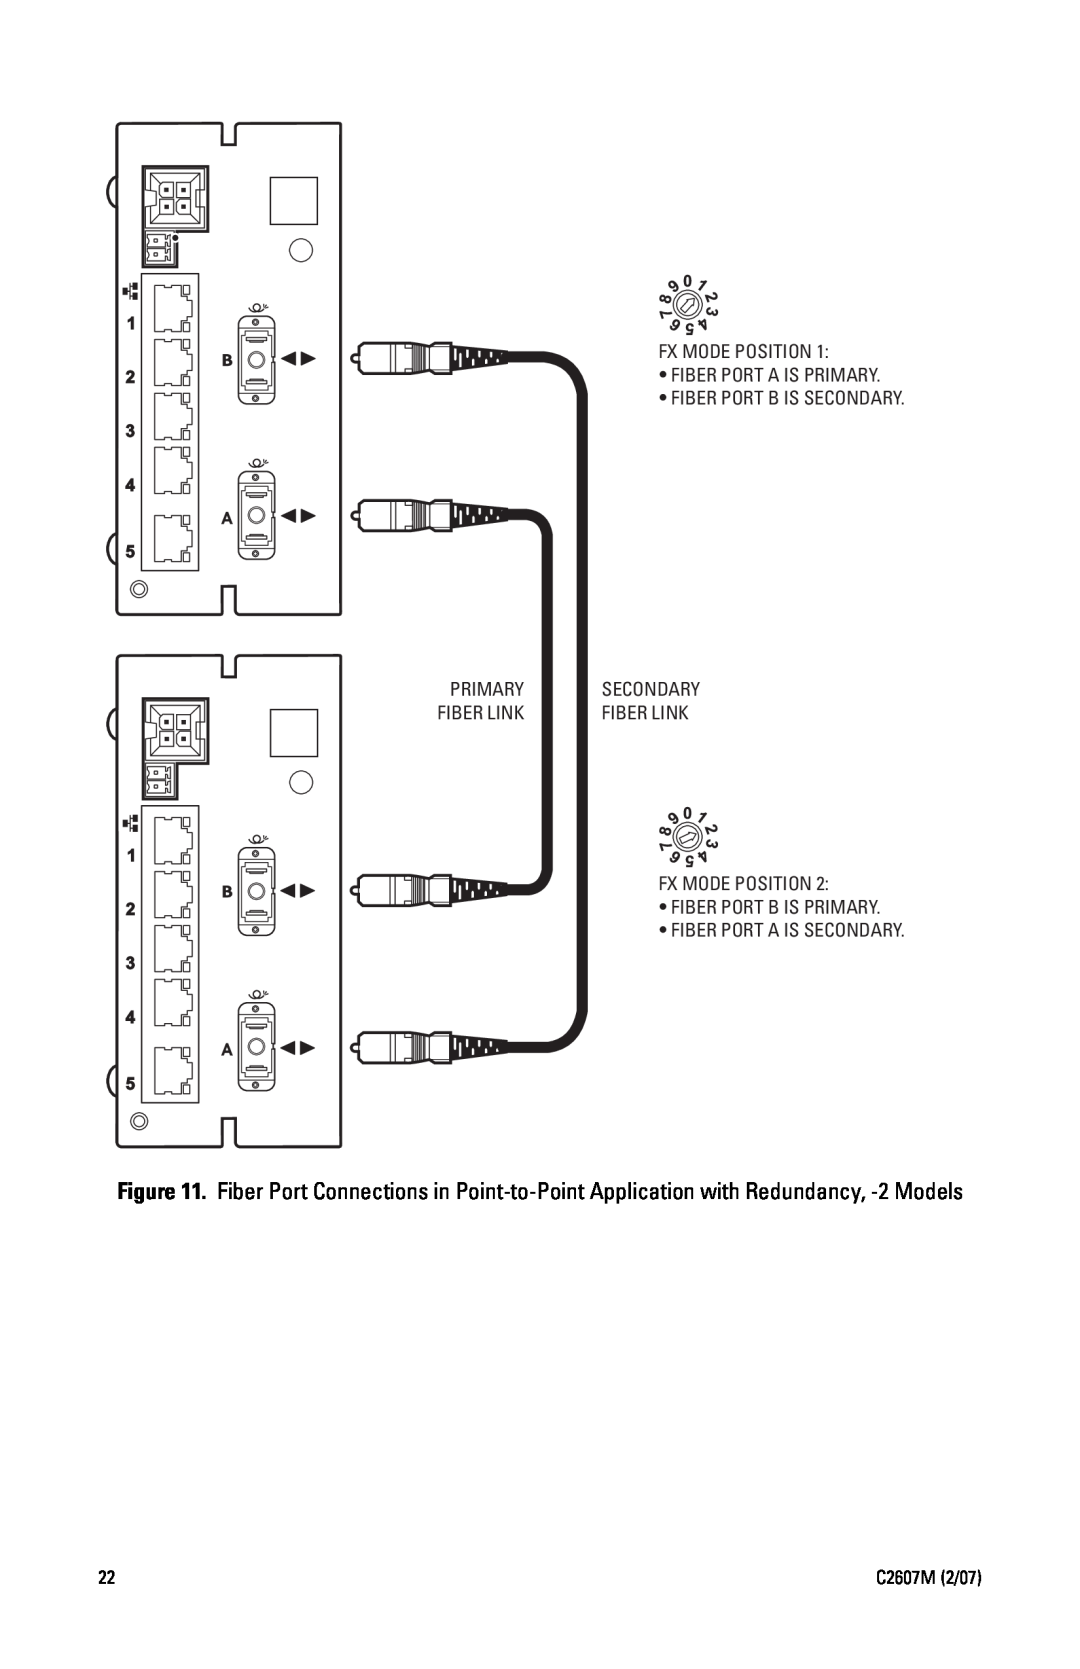 Pelco 100BASE-FX, 100BASE-TX Fx Mode Position Fiber Port A Is Primary Fiber Port B Is Secondary, Fiber Link, C2607M 2/07 